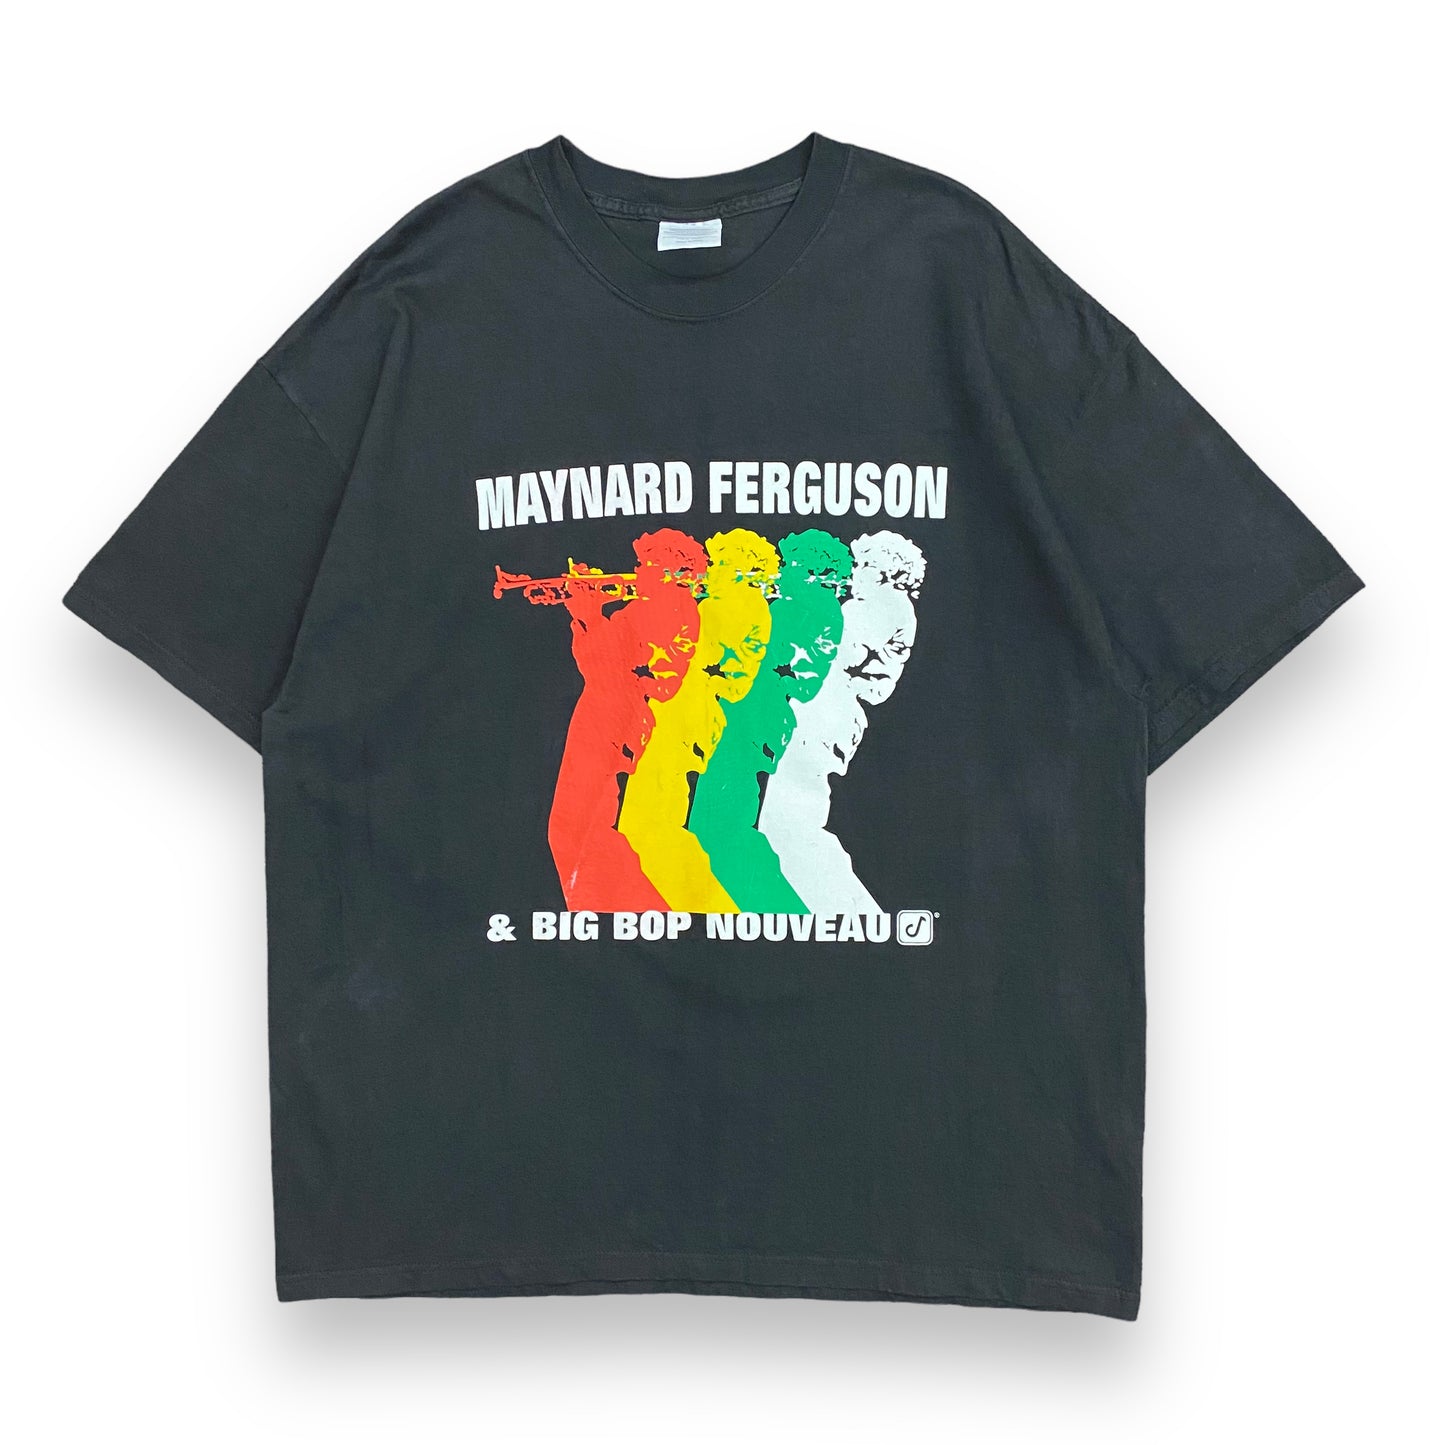 2002 Maynard Ferguson "World Tour" Concert Tee - Size XL